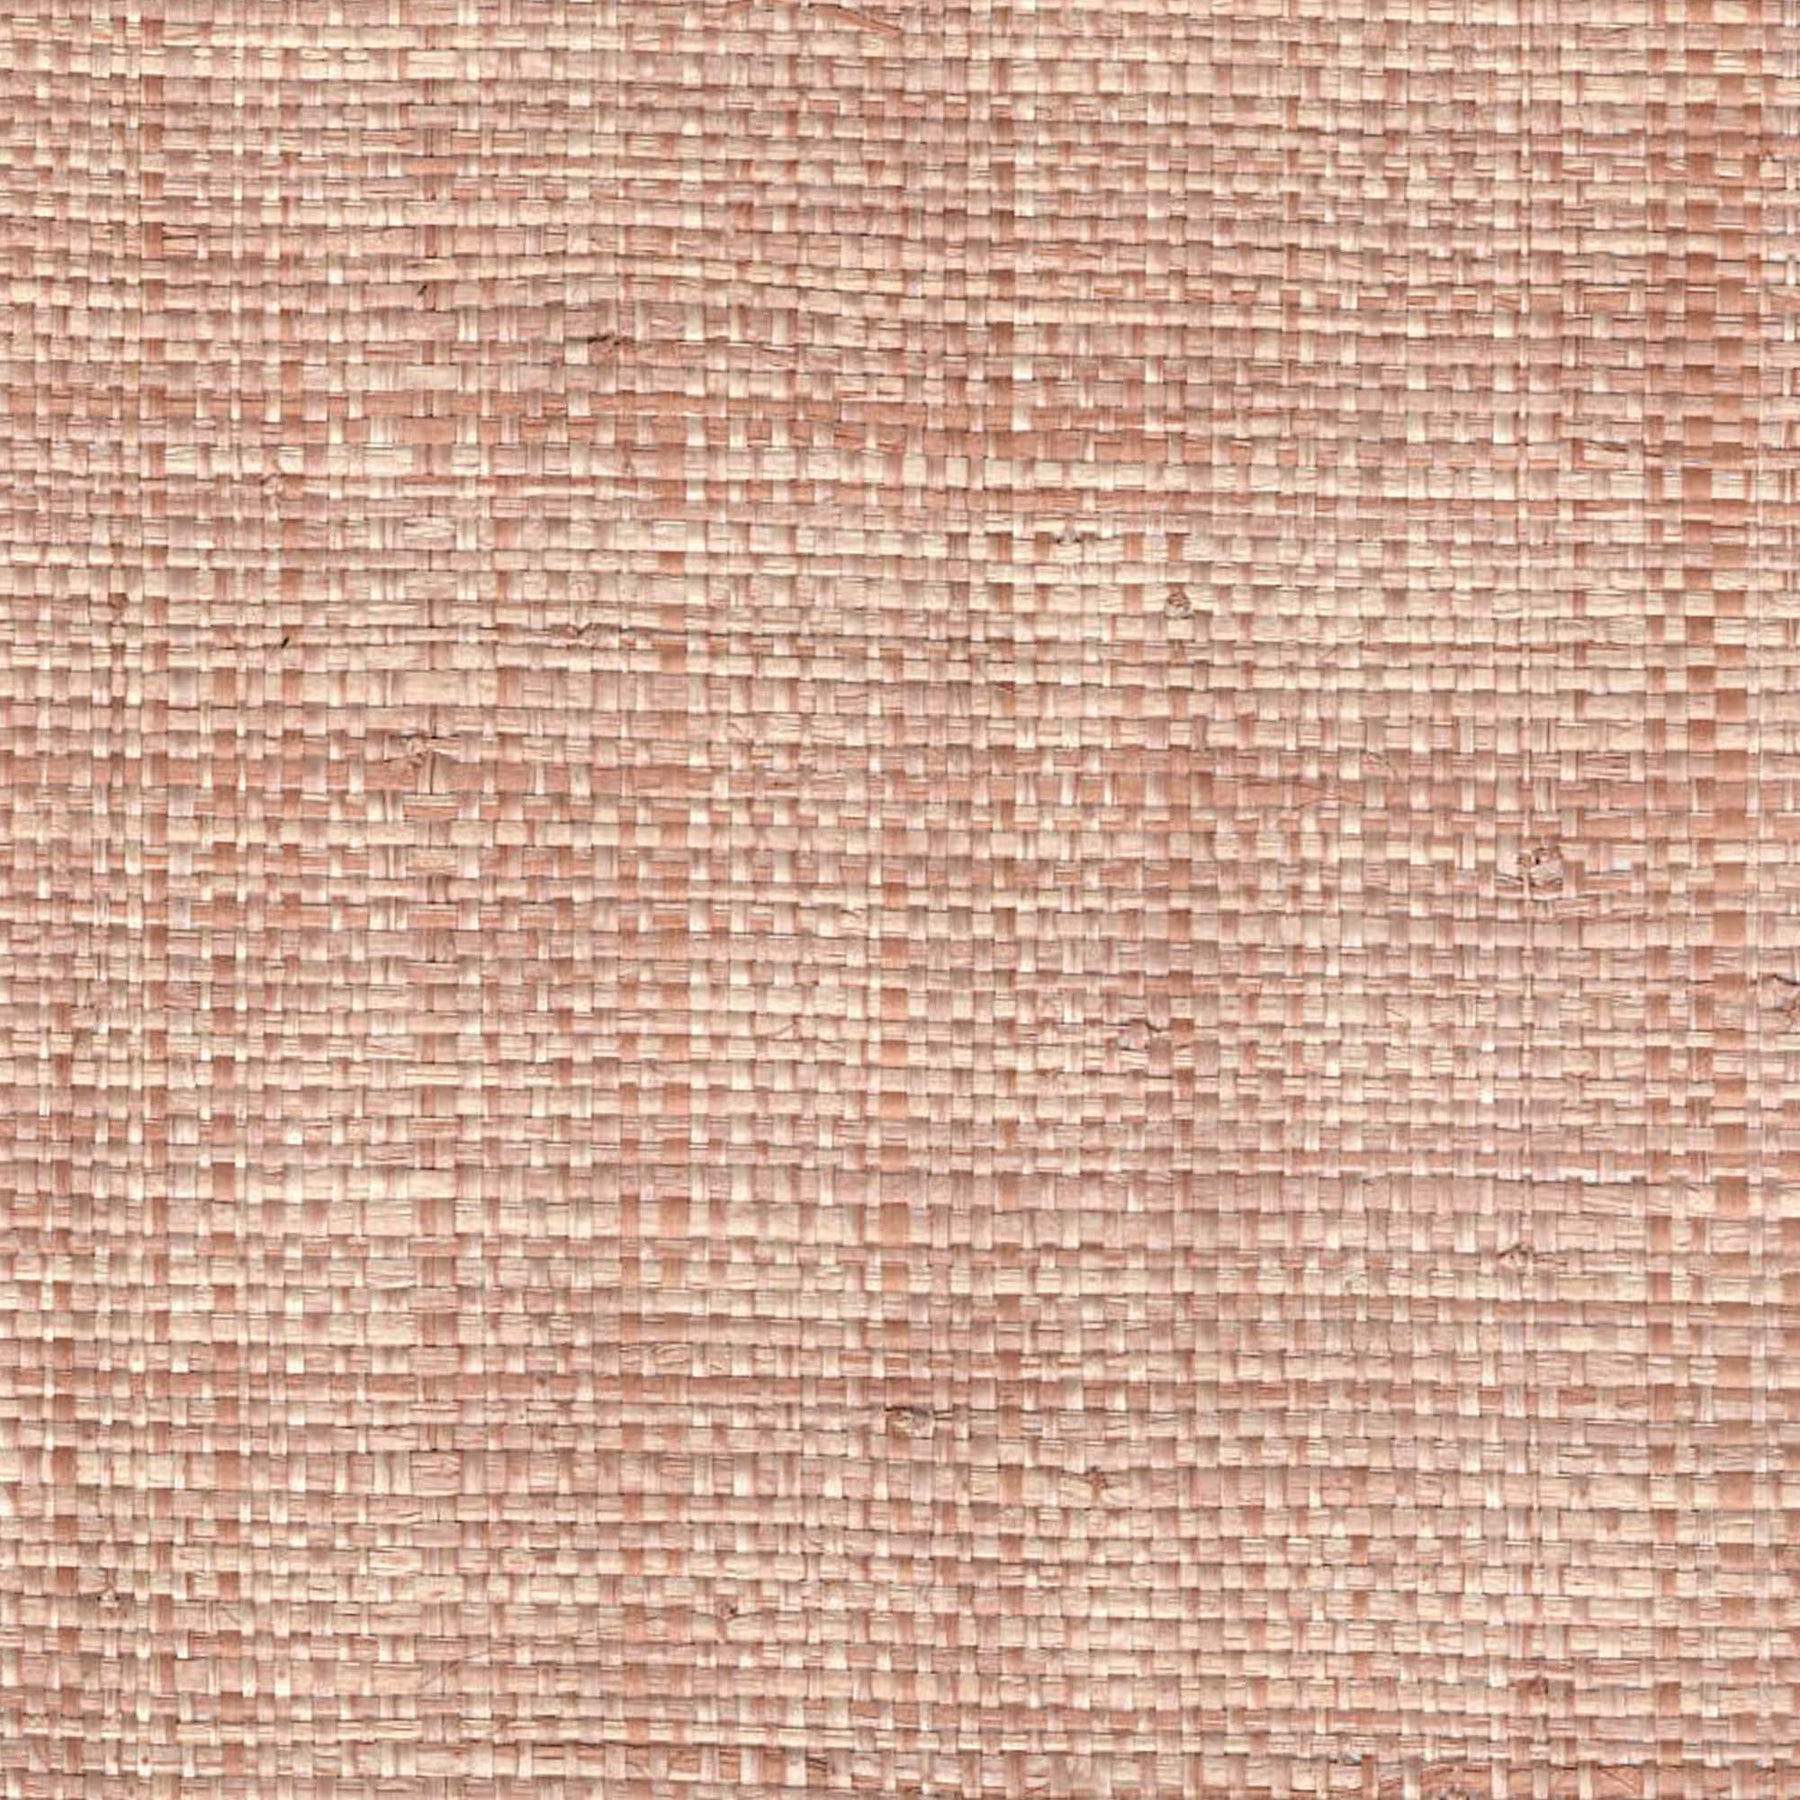 Premium AI Image | Texture raffia wallpaper